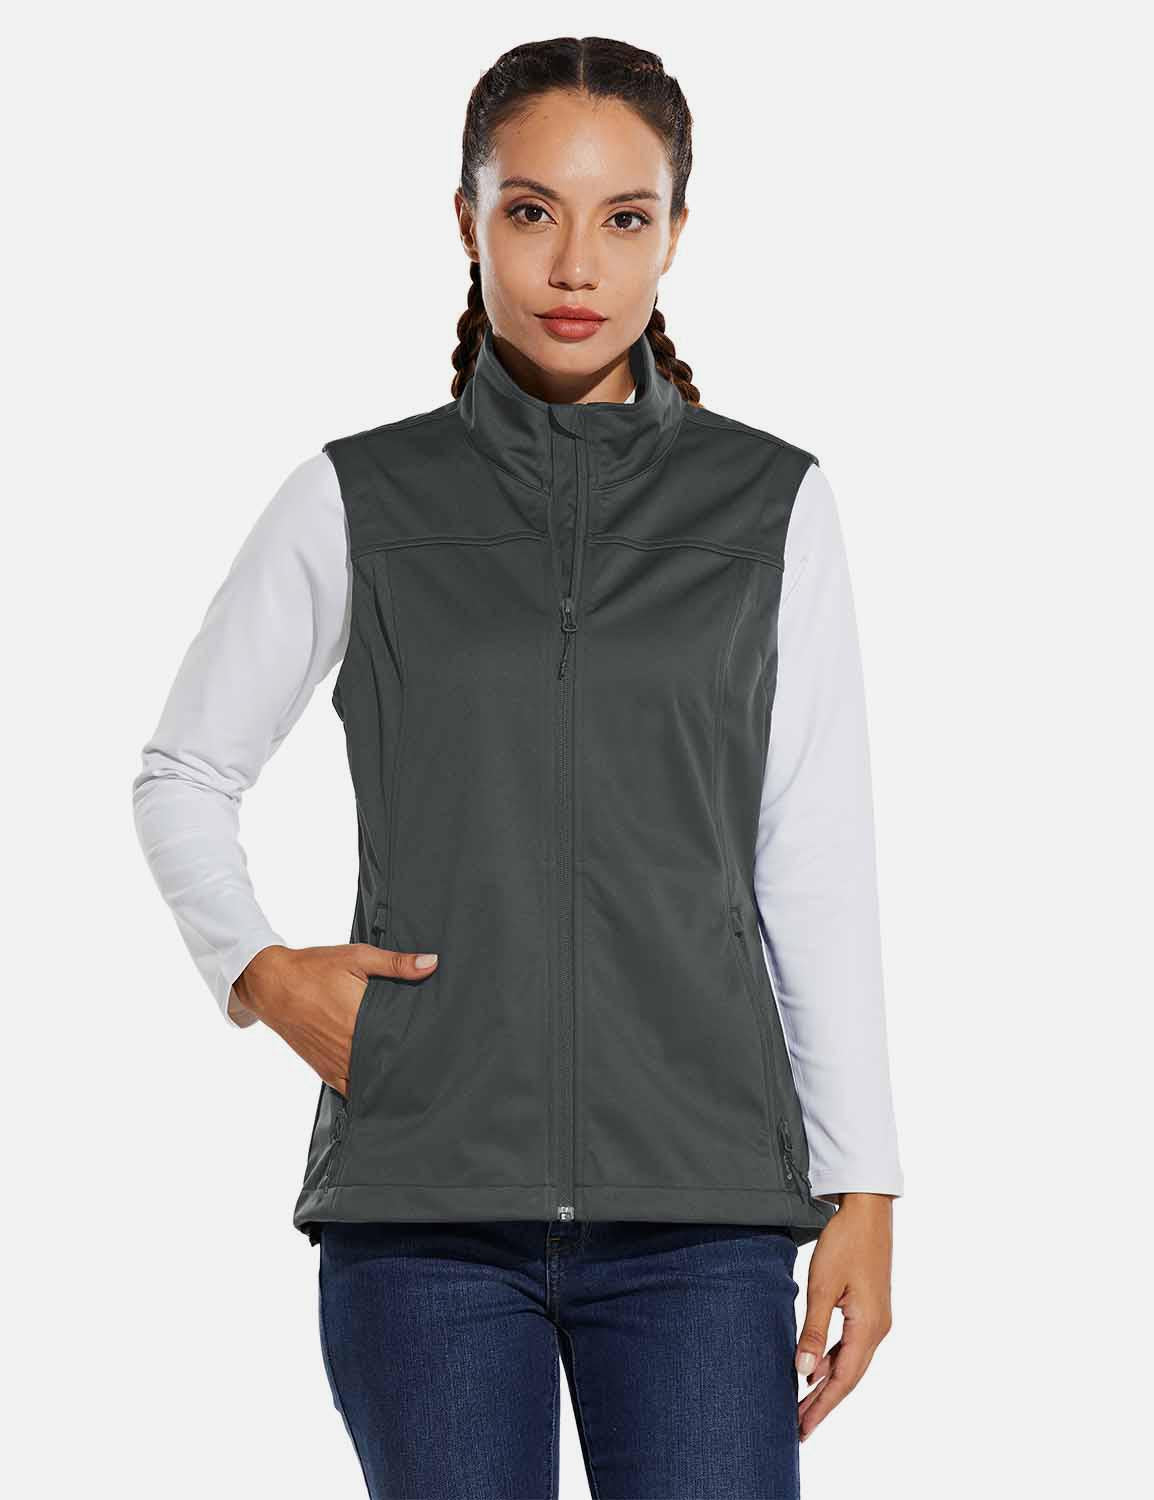 Baleaf Womens Windproof & Waterproof Sleeveless Vest w Full Zip Pocket aga106 Gray Front